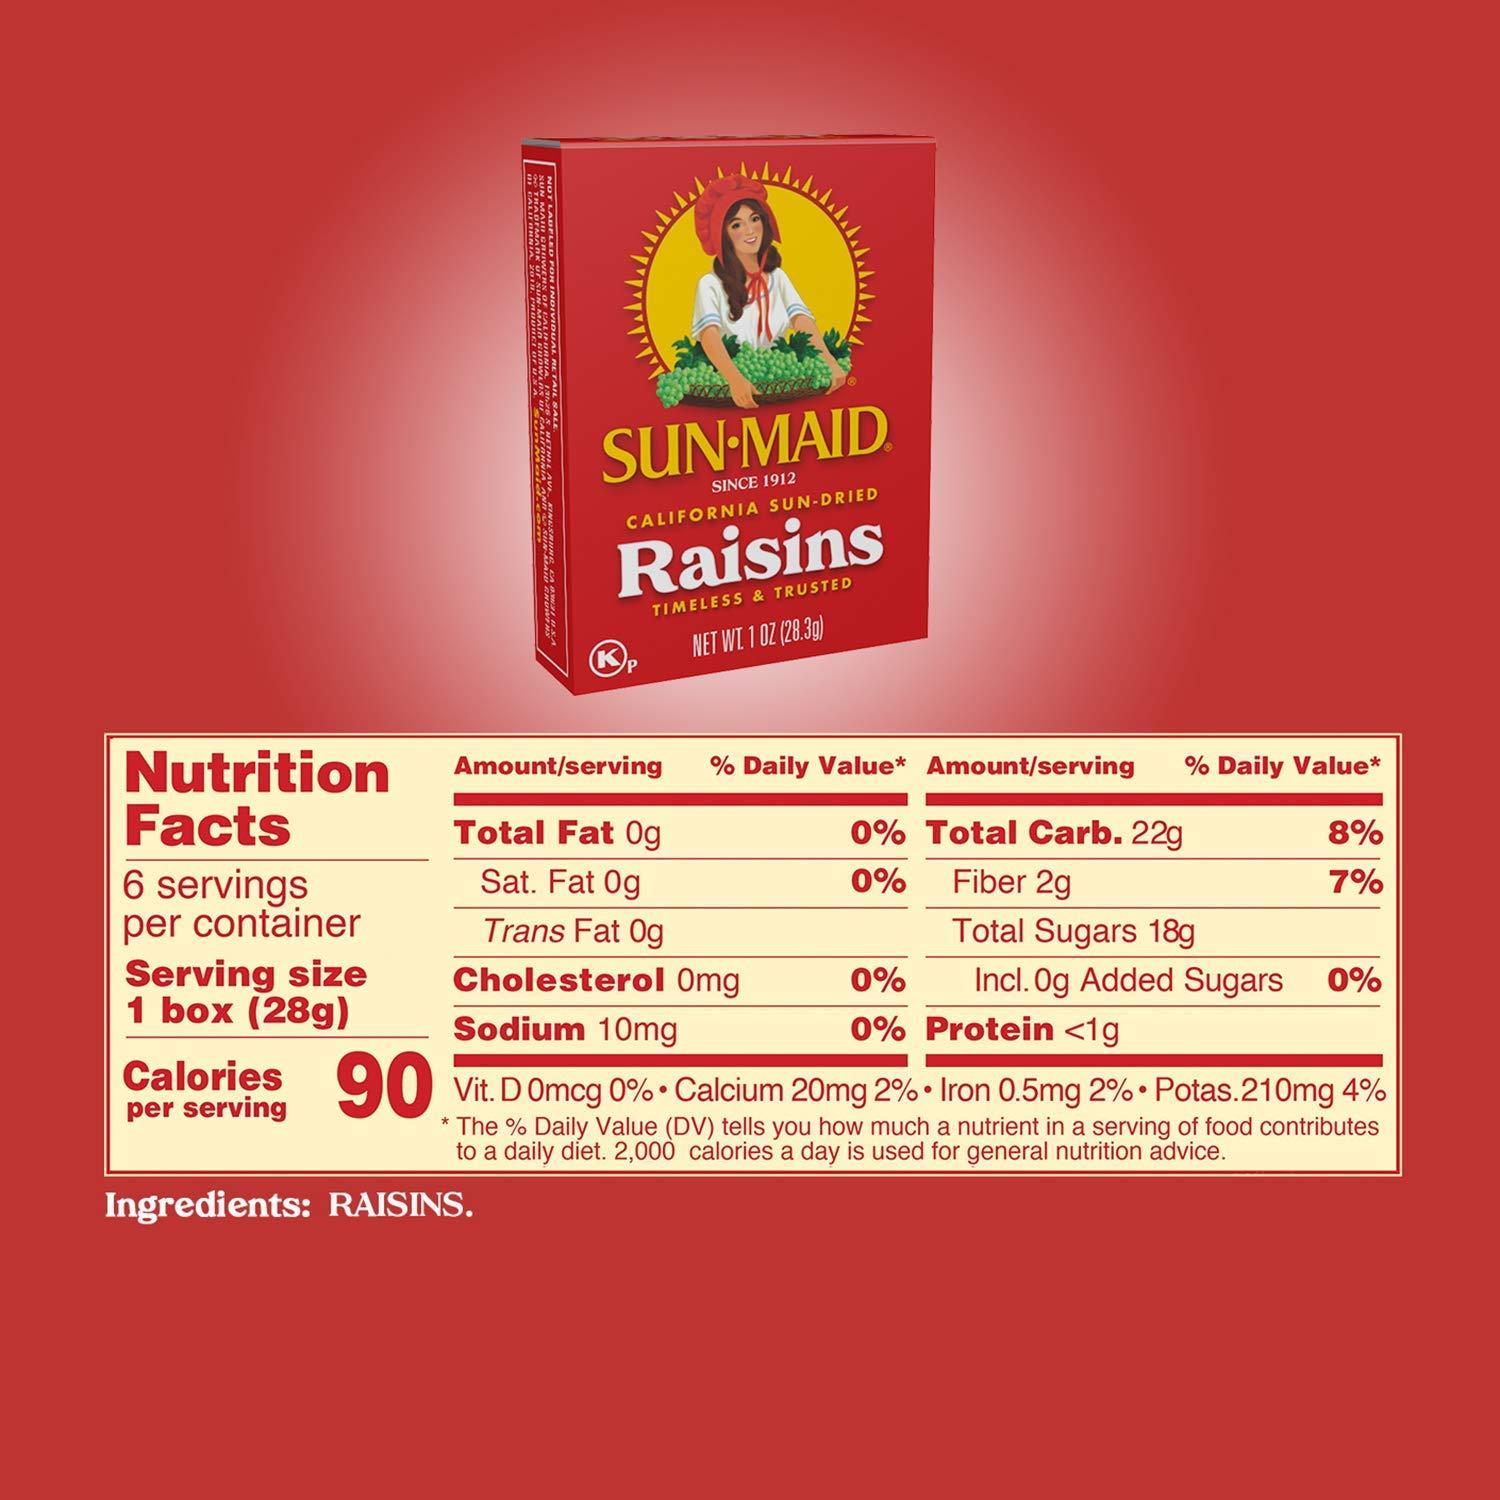 Nutrition Information & Facts Label - California Raisins